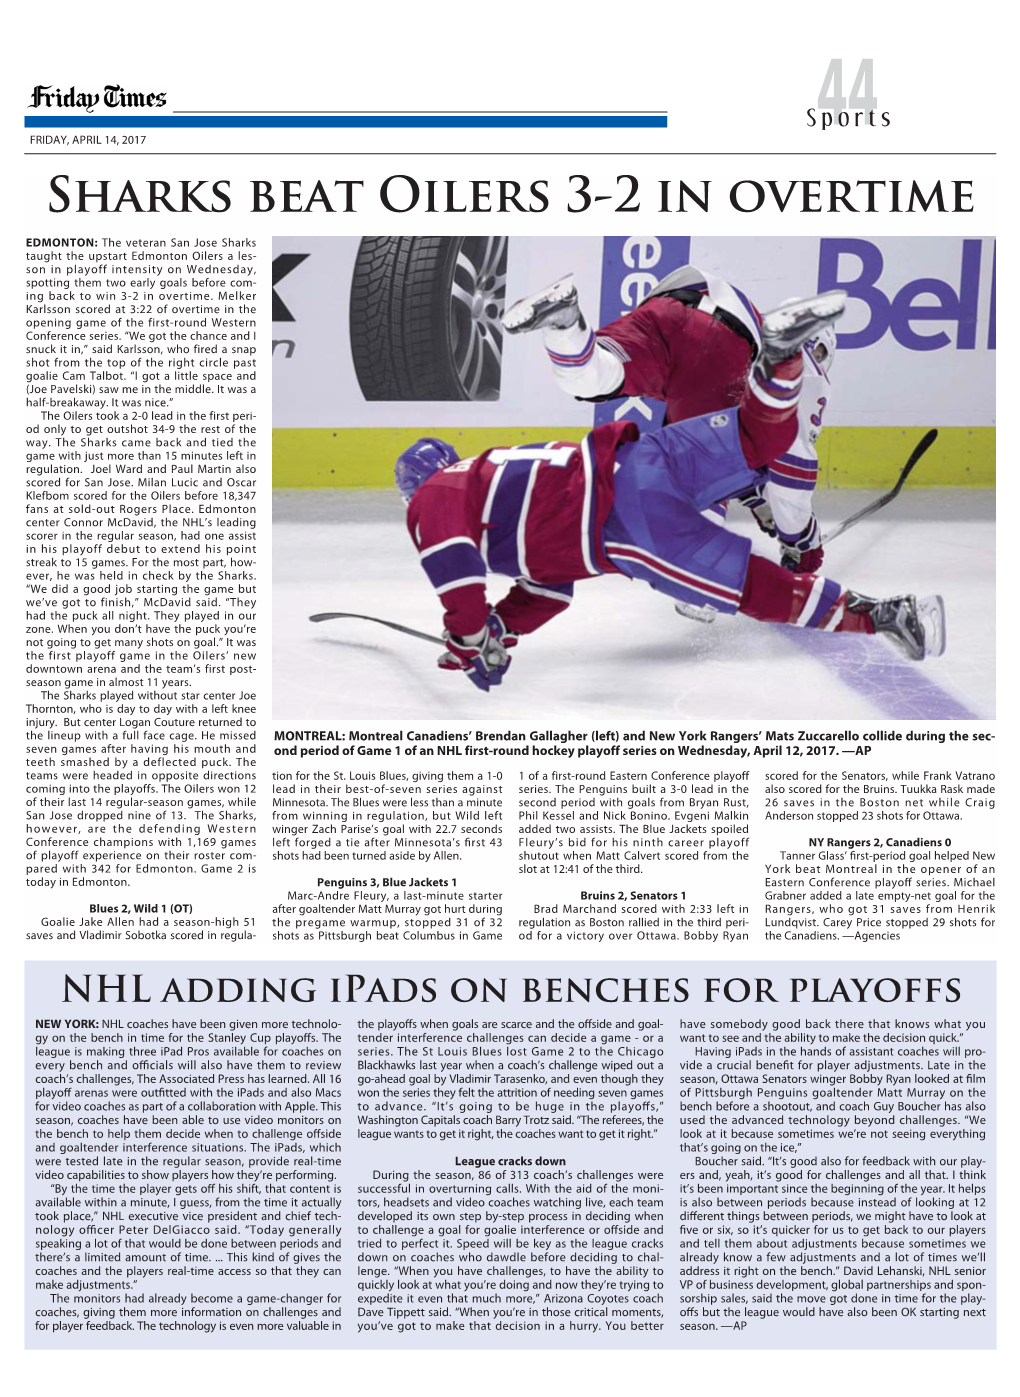 Sharks Beat Oilers 3-2 in Overtime